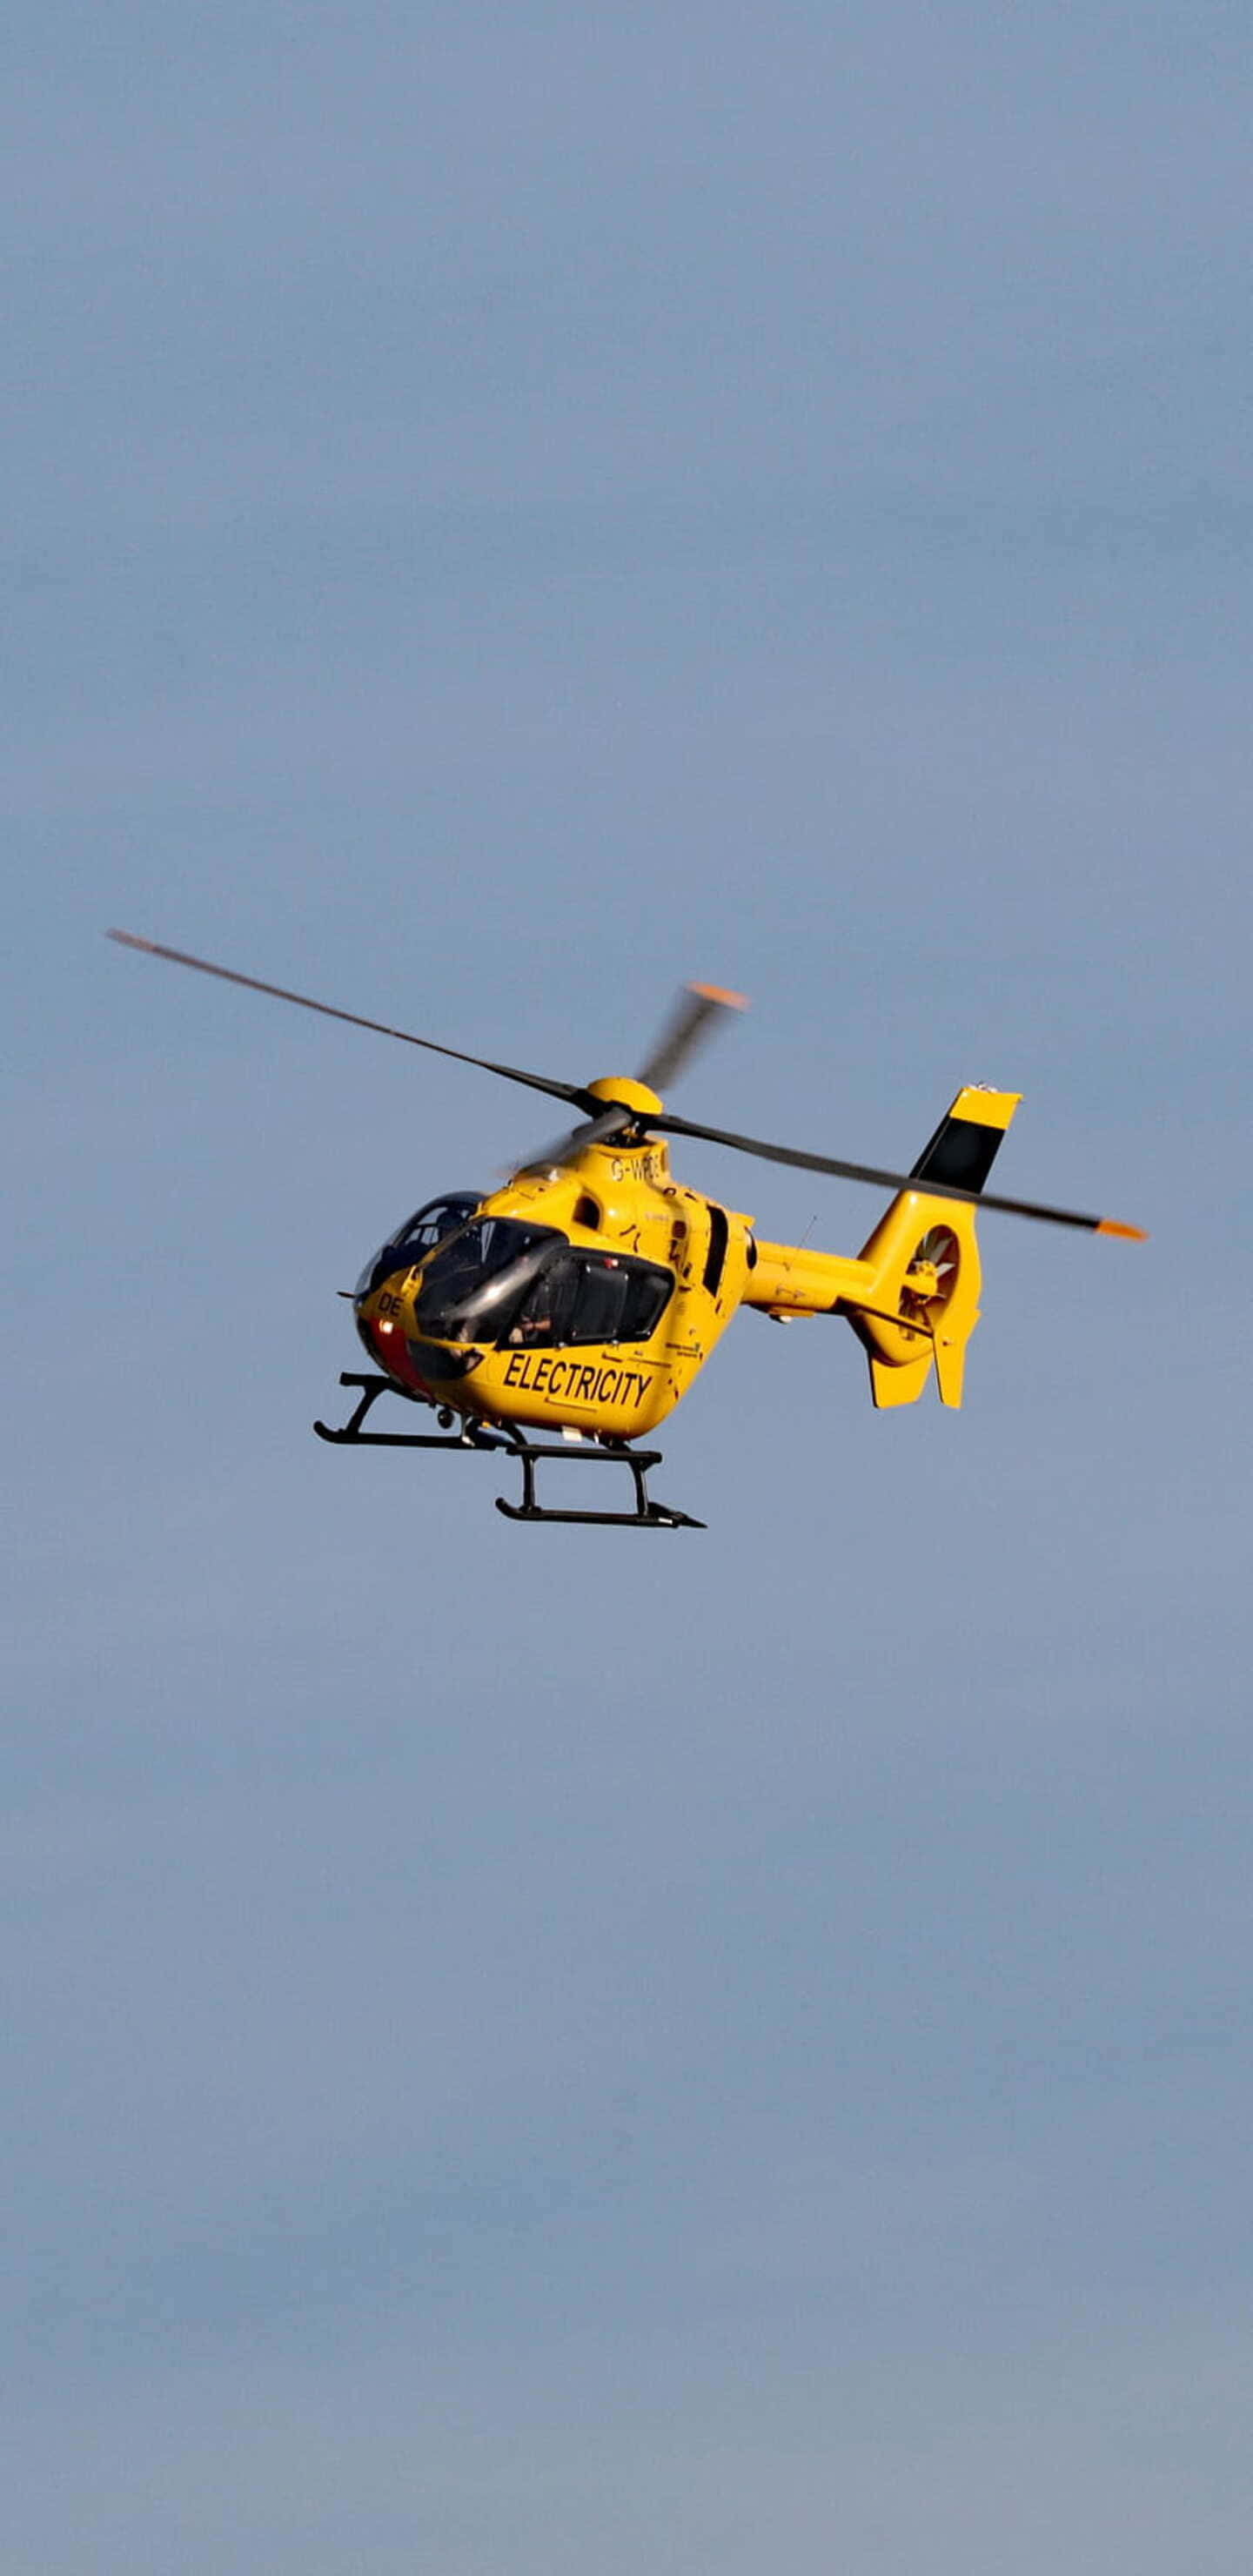 Sfondoper Pixel 3xl Con Elicotteri: Un Eurocopter Ec135 Giallo.